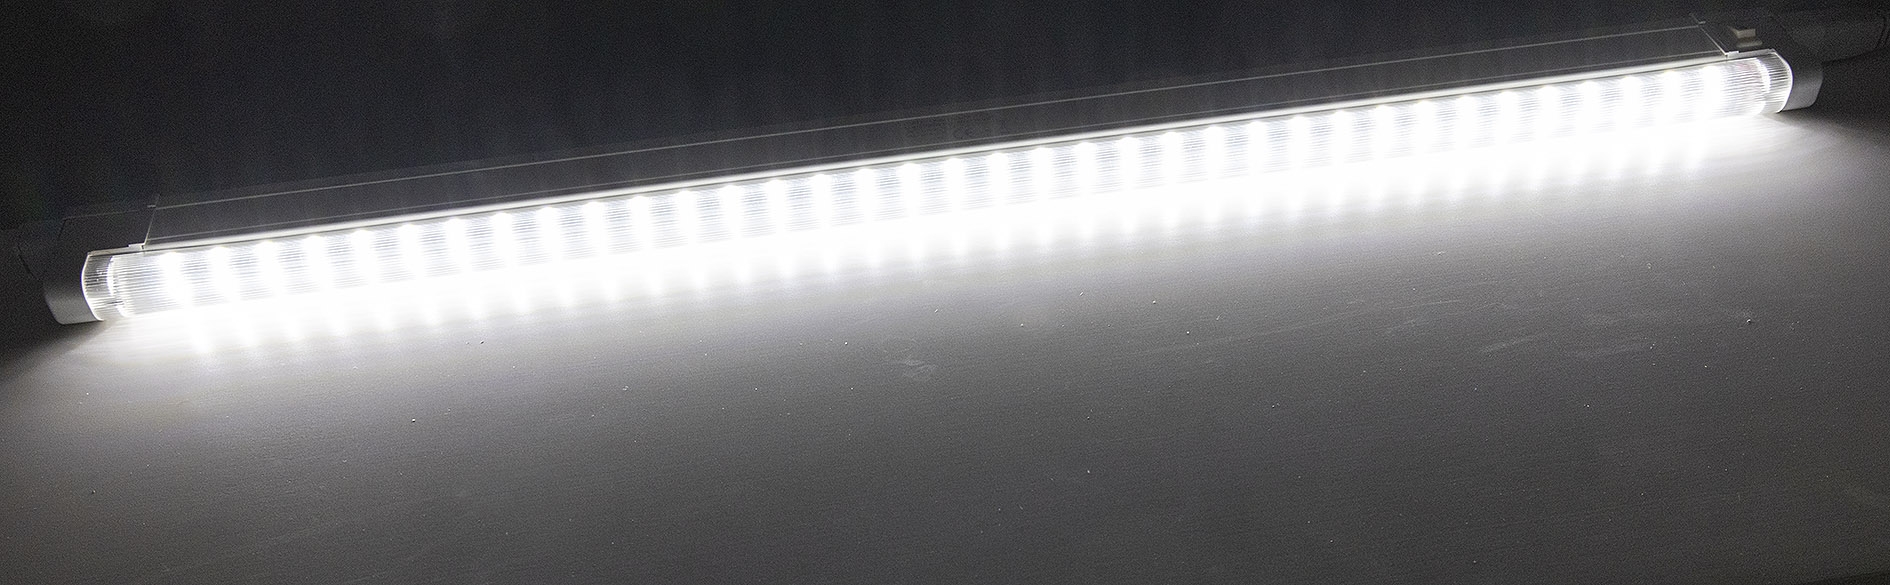 LED Unterbauleuchte "SMD pro" 60cm  - Bild 2